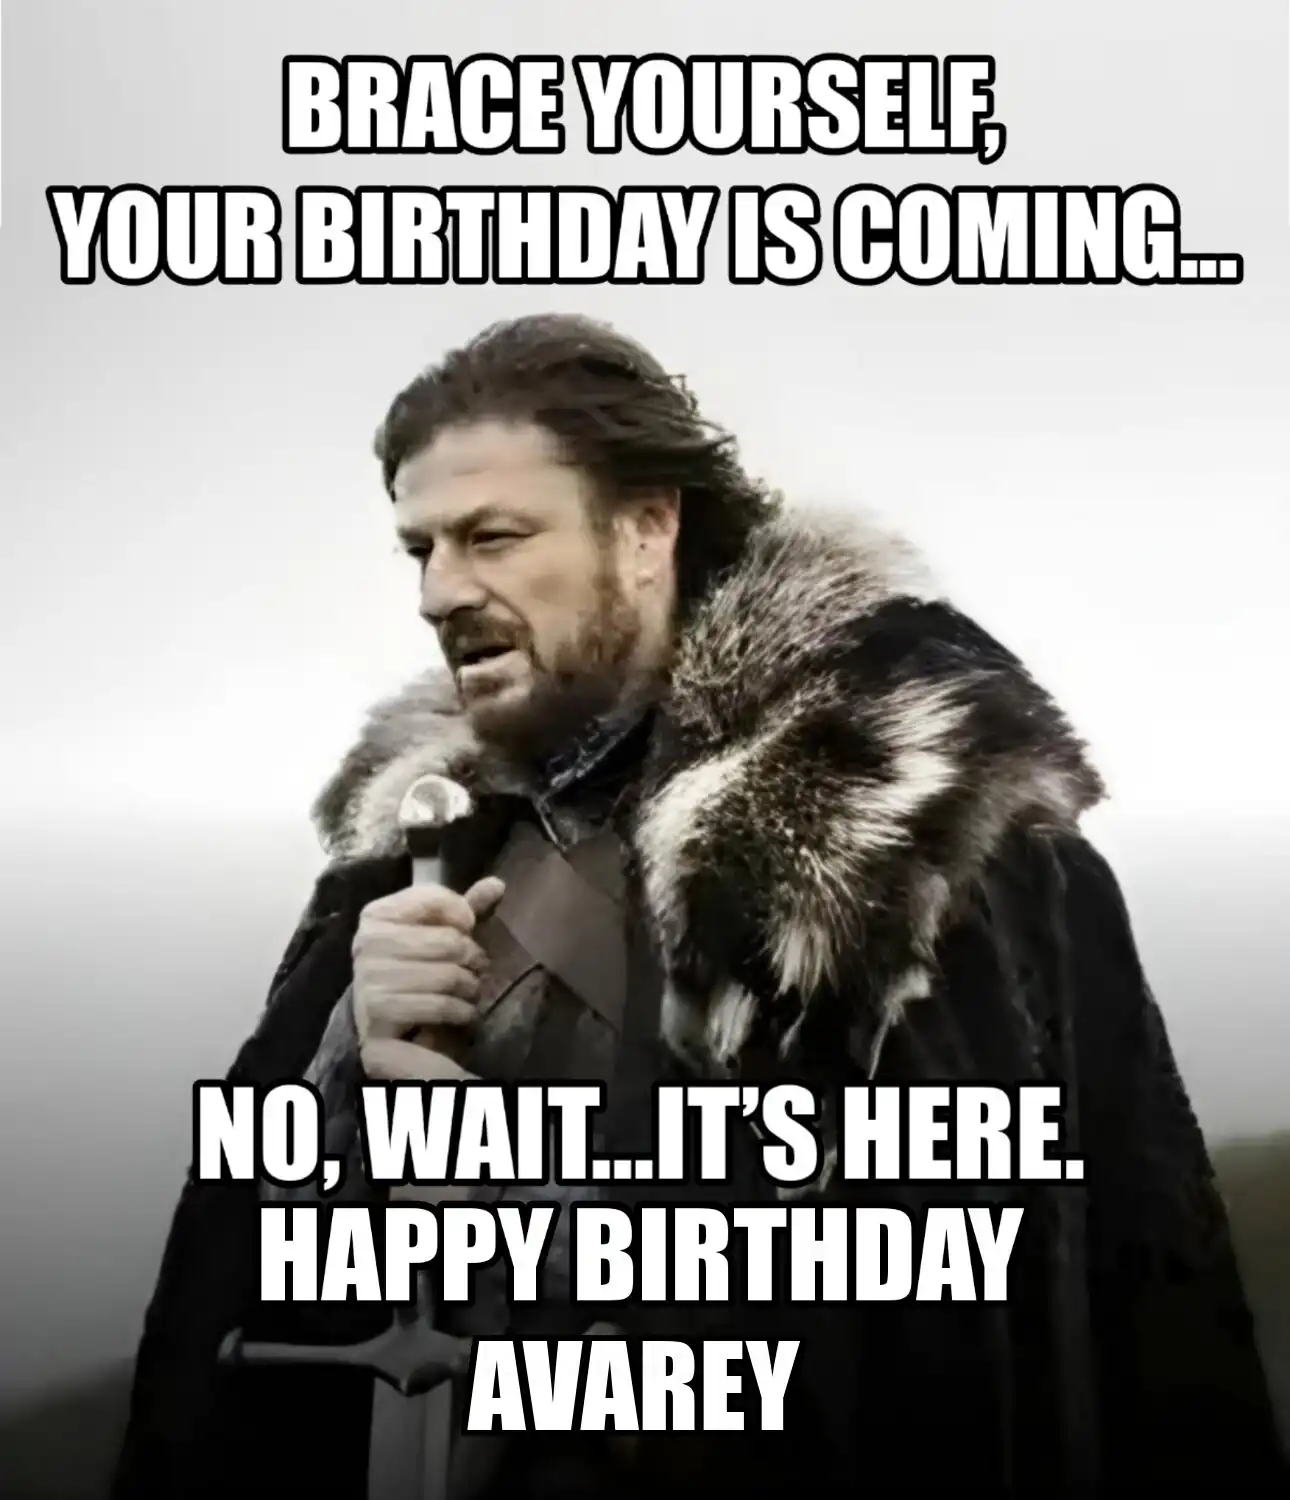 Happy Birthday Avarey Brace Yourself Your Birthday Is Coming Meme